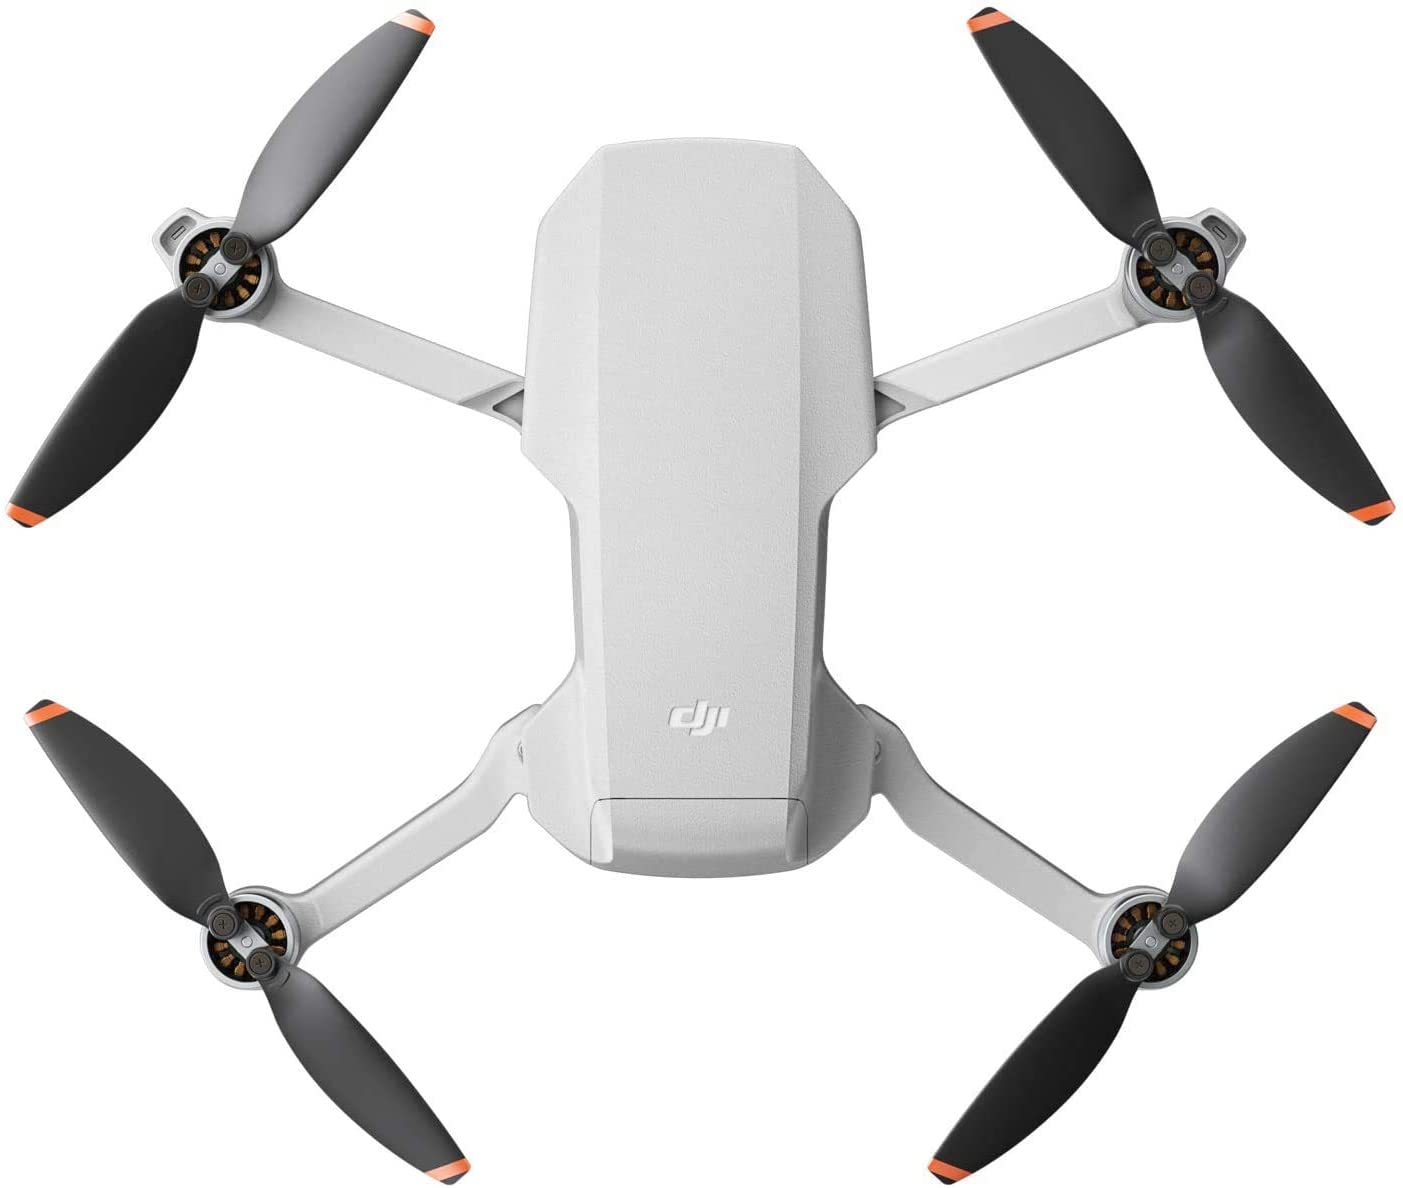 DJI Mini 2 4K Drone Fly More Combo